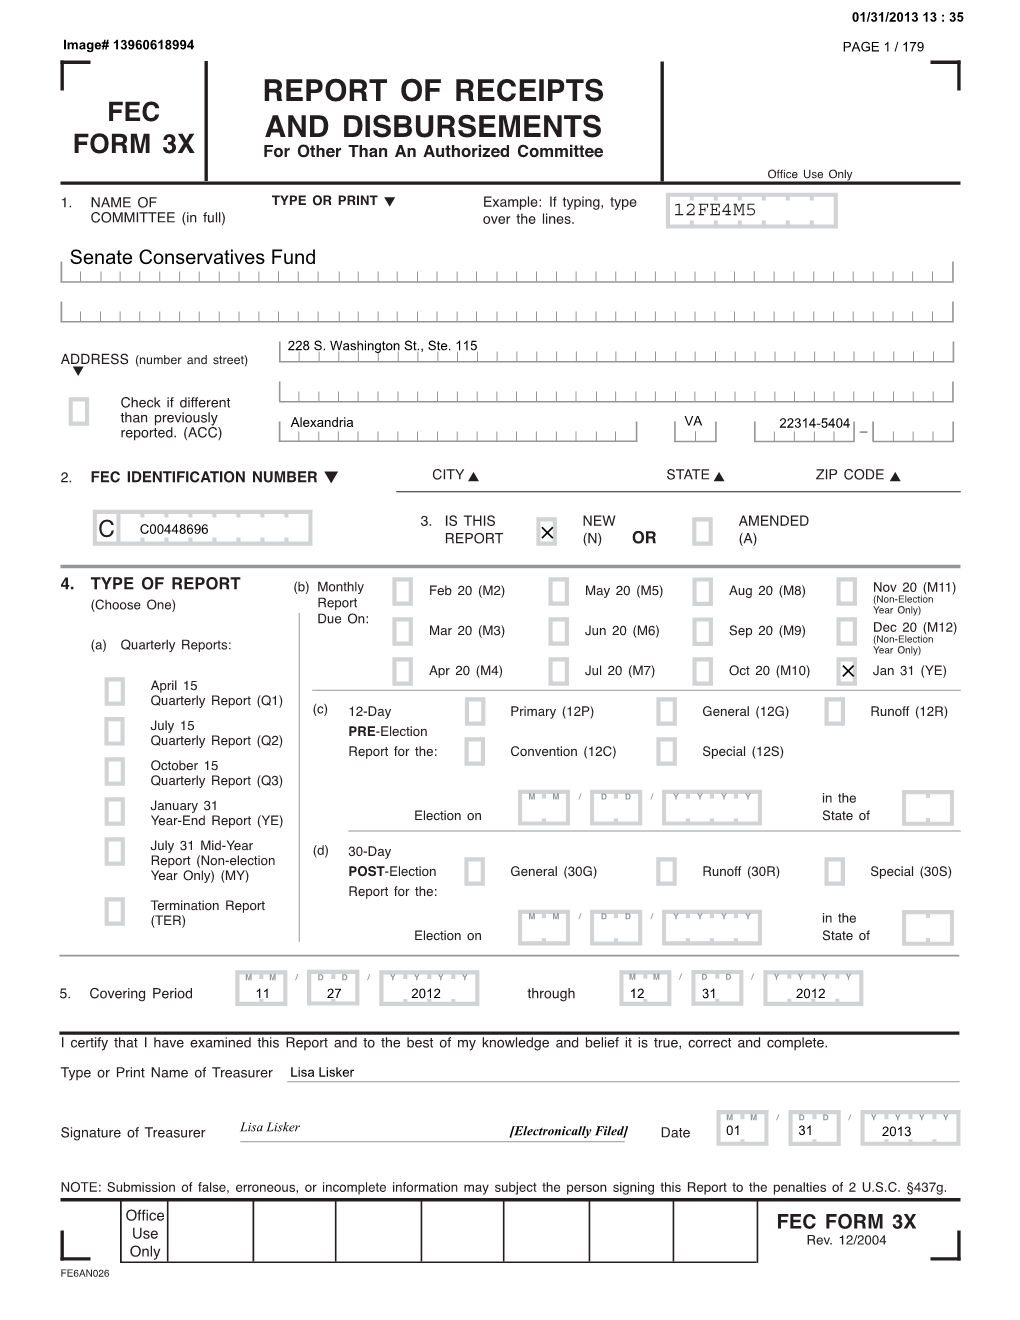 Report of Receipts and Disbursements